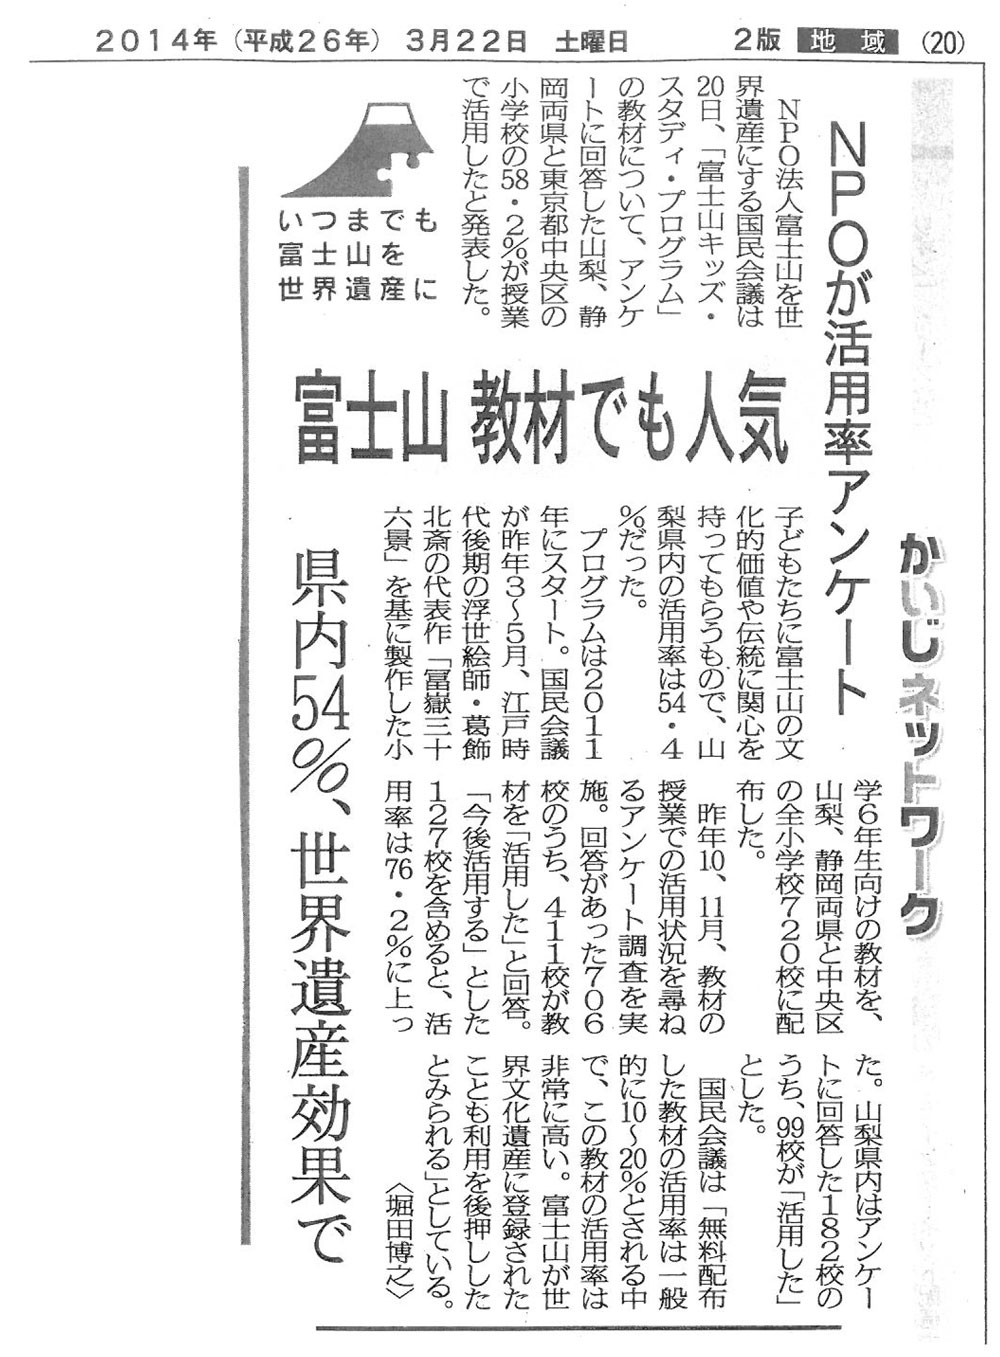 http://mtfuji.or.jp/img/media/_old/img/mtfuji_news_20140322.jpg